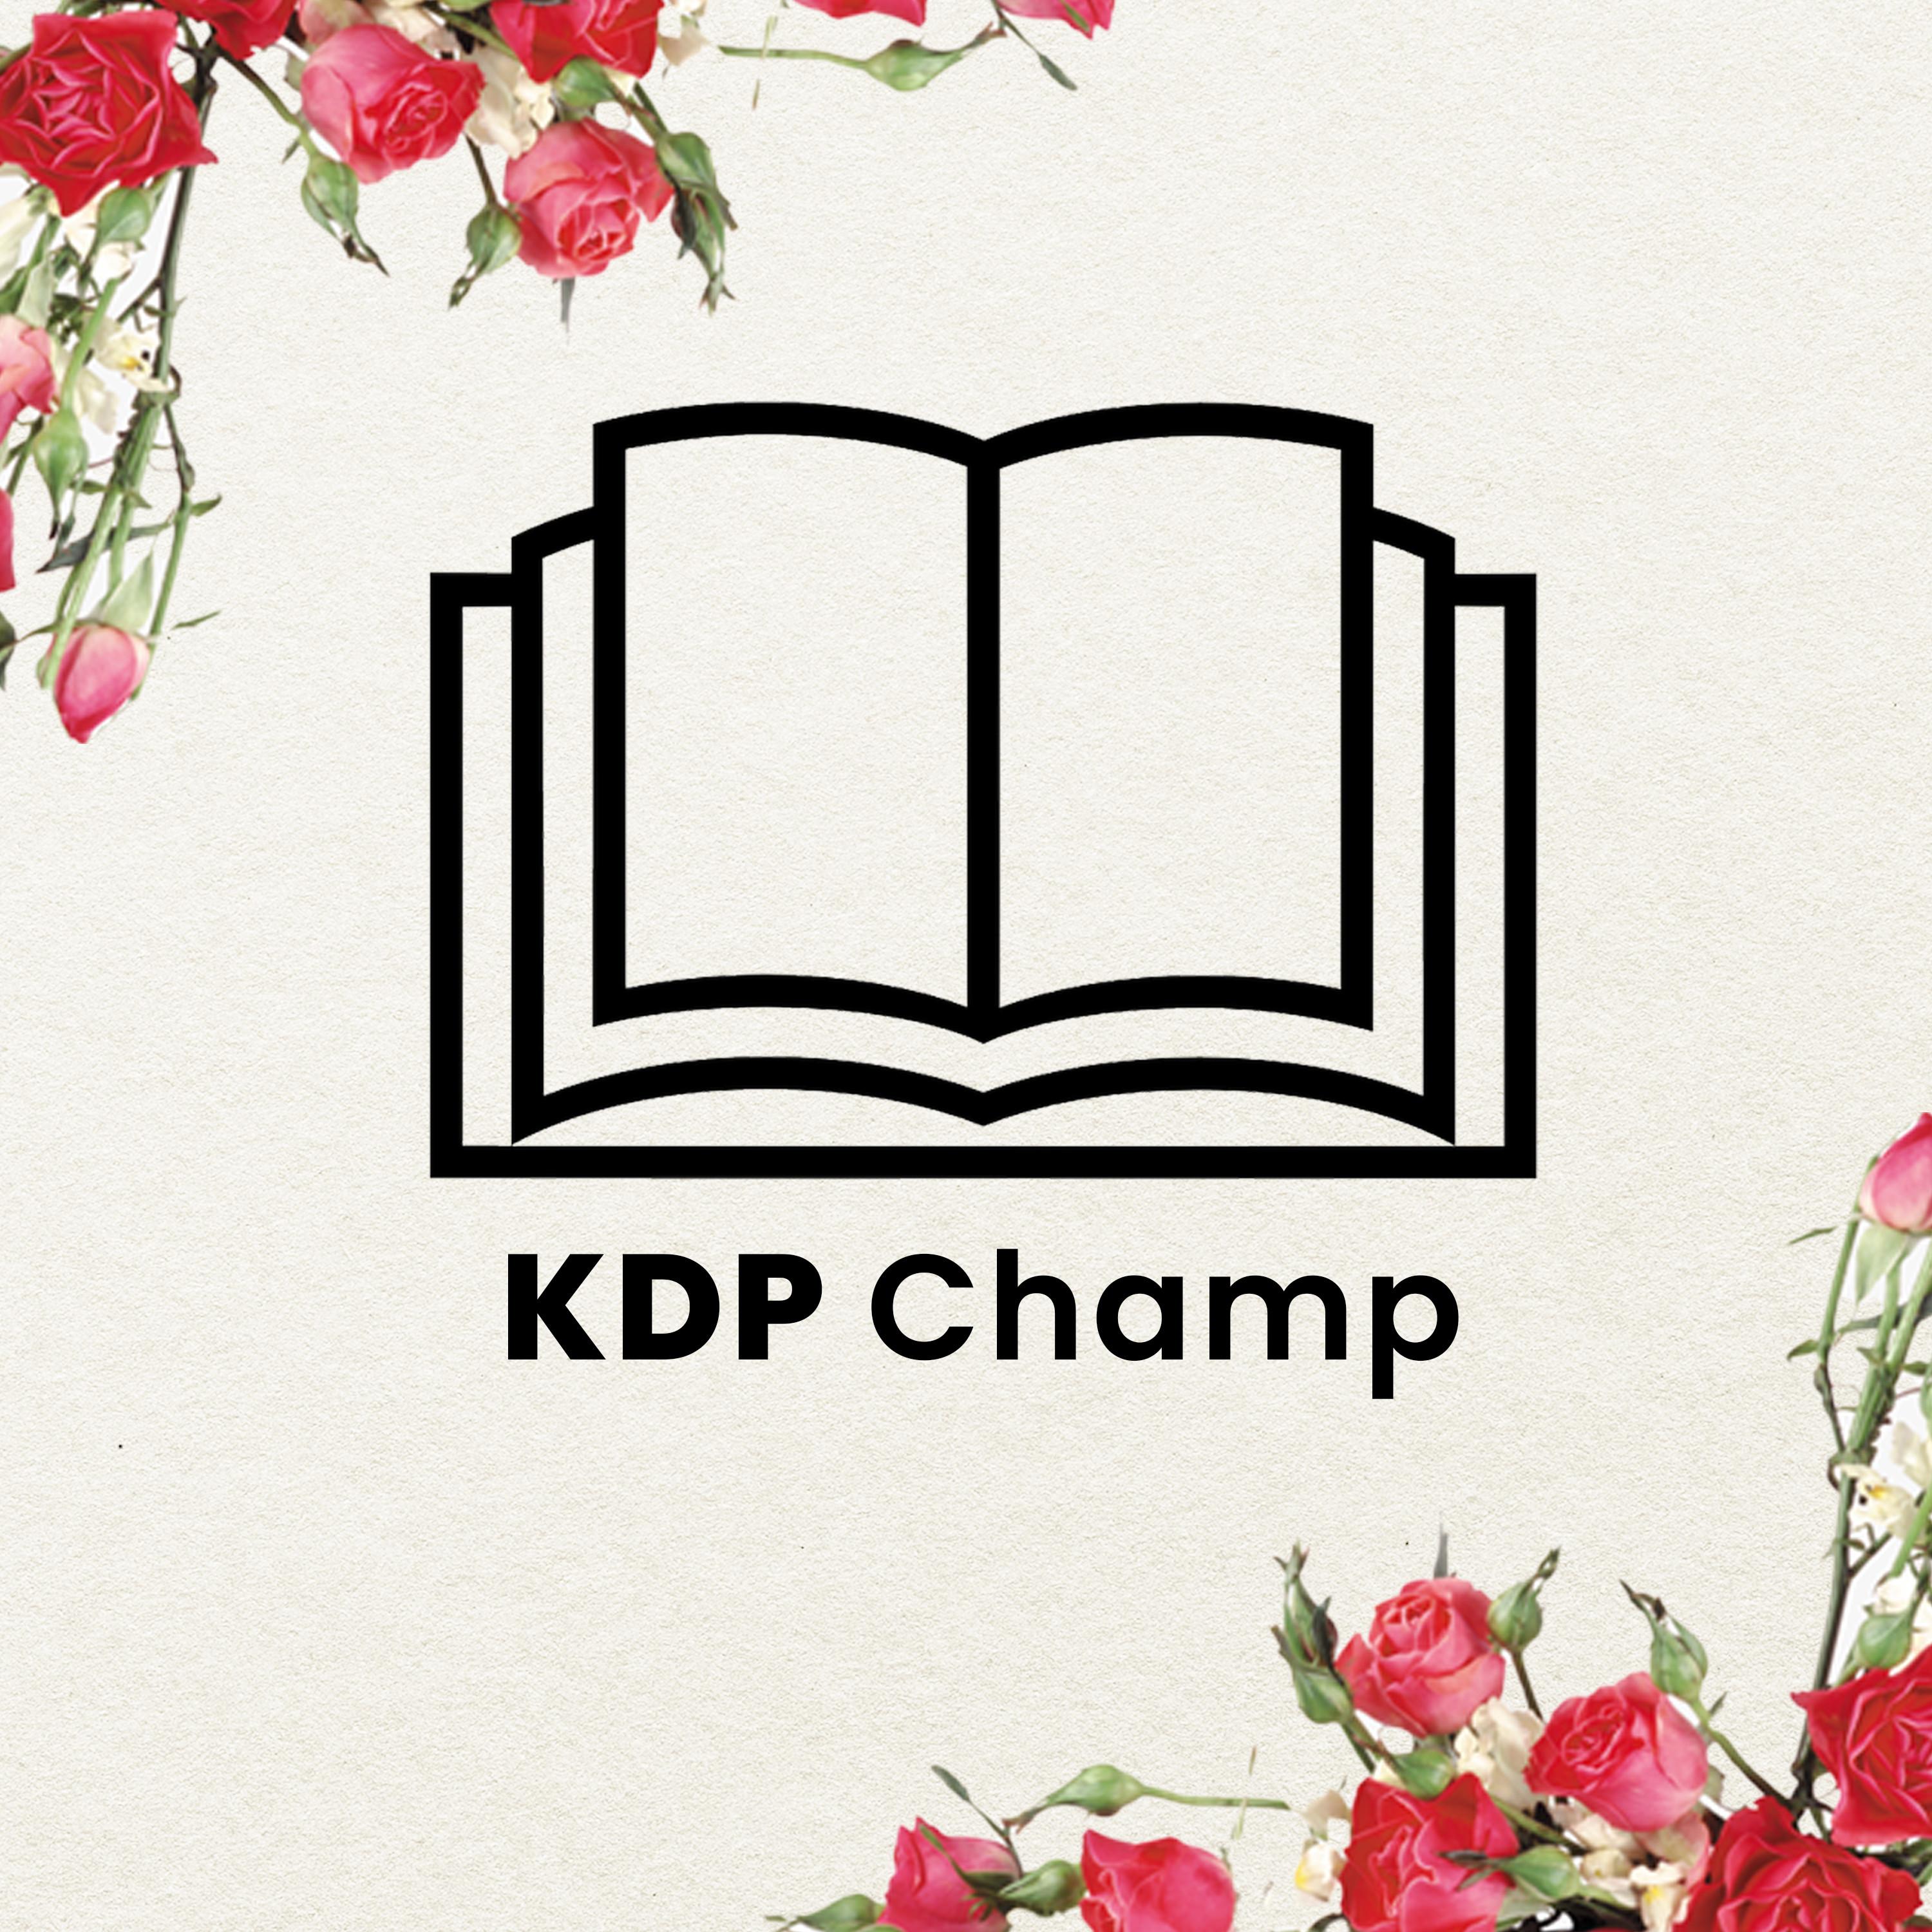 KDP Champ